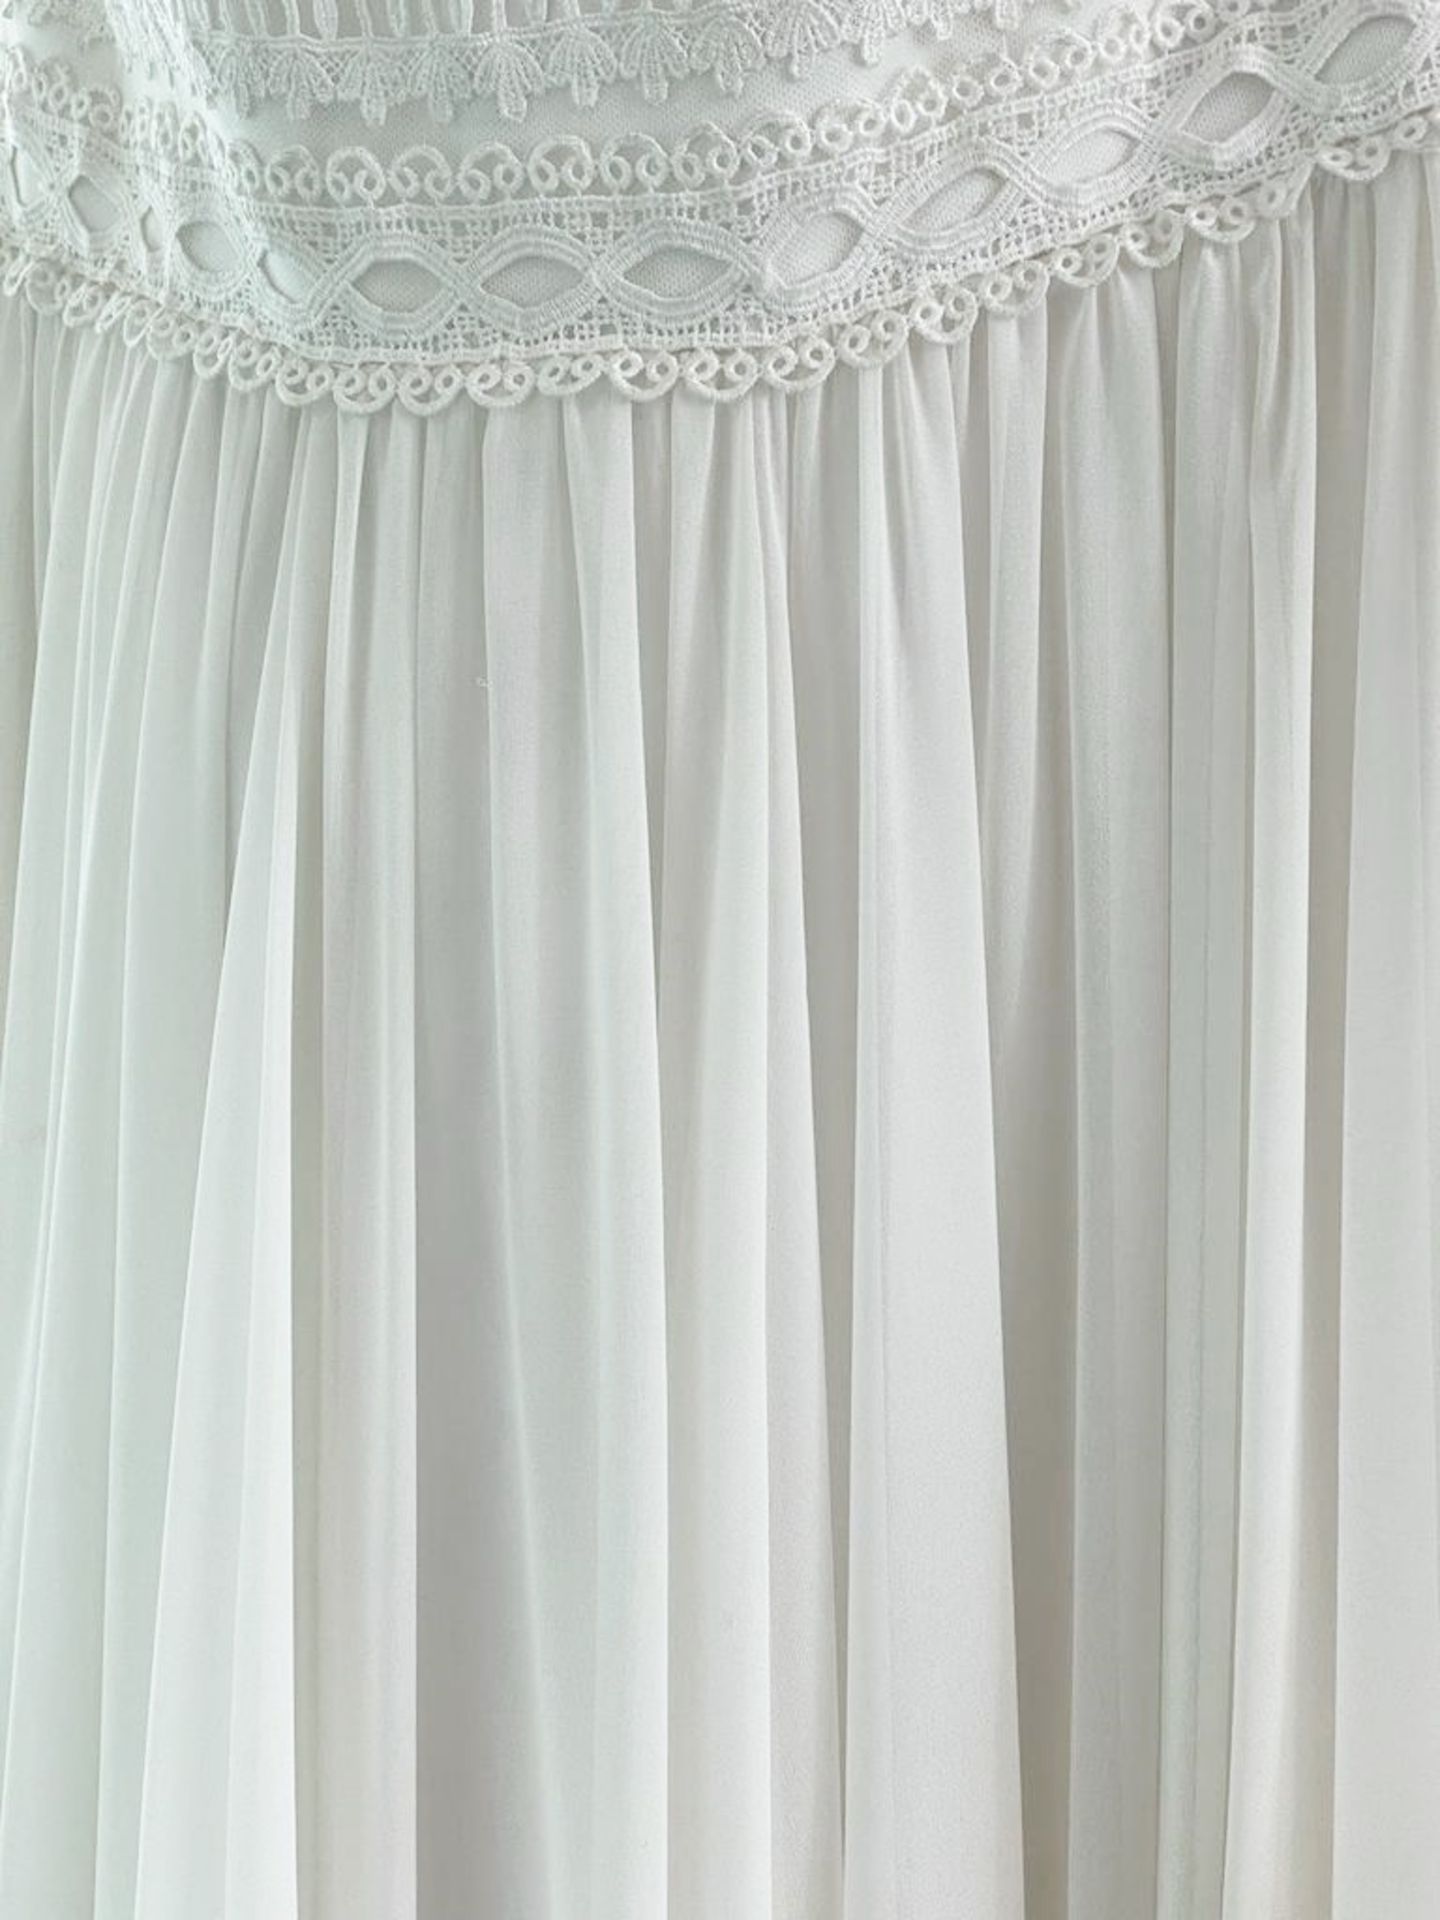 1 x PRONOVIAS 'Dramia' Designer Crocheted Lace Wedding Dress Bridal Gown, With Chiffon Gathered - Image 13 of 20